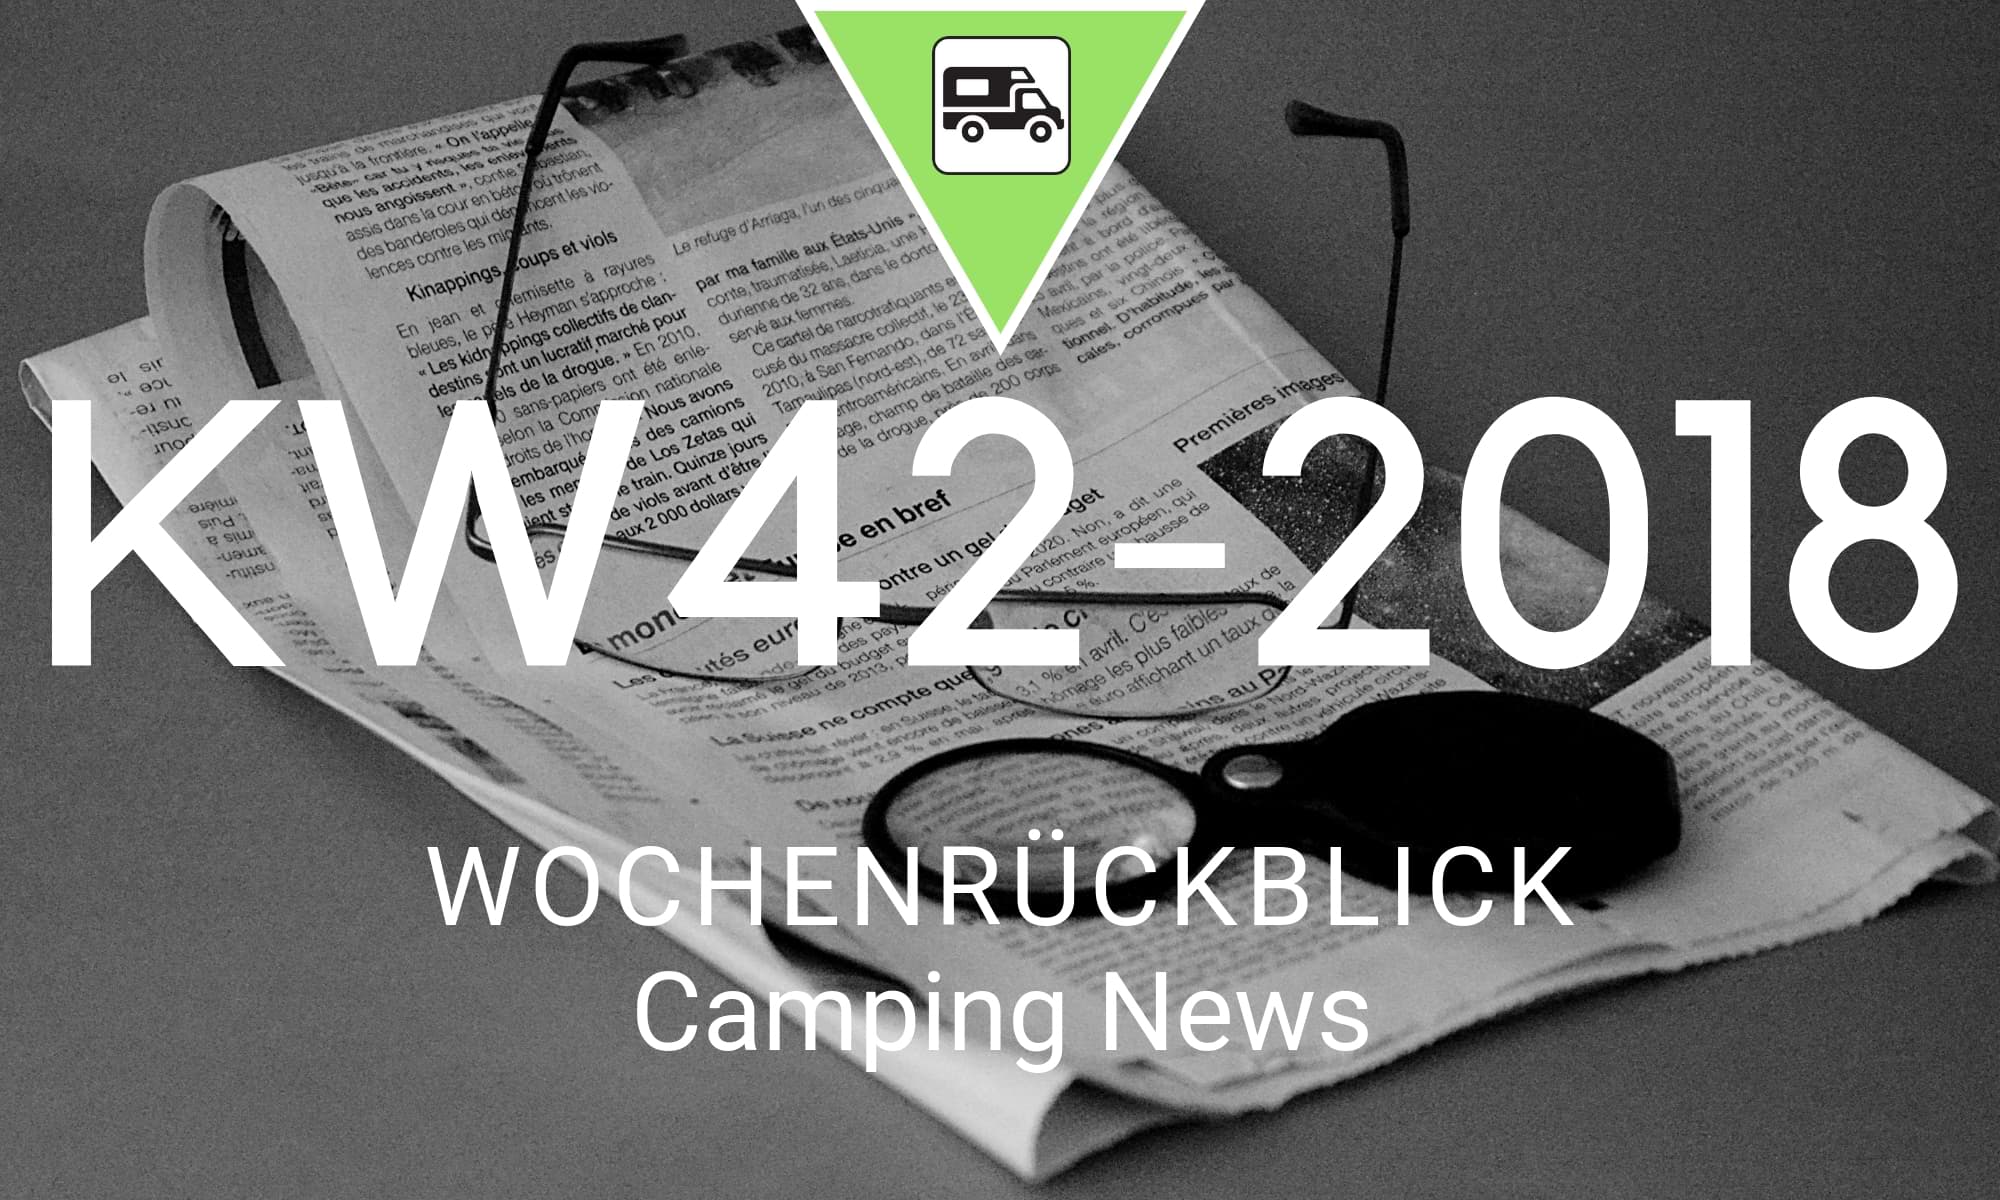 Wochenrückblick Camping News KW42-2018